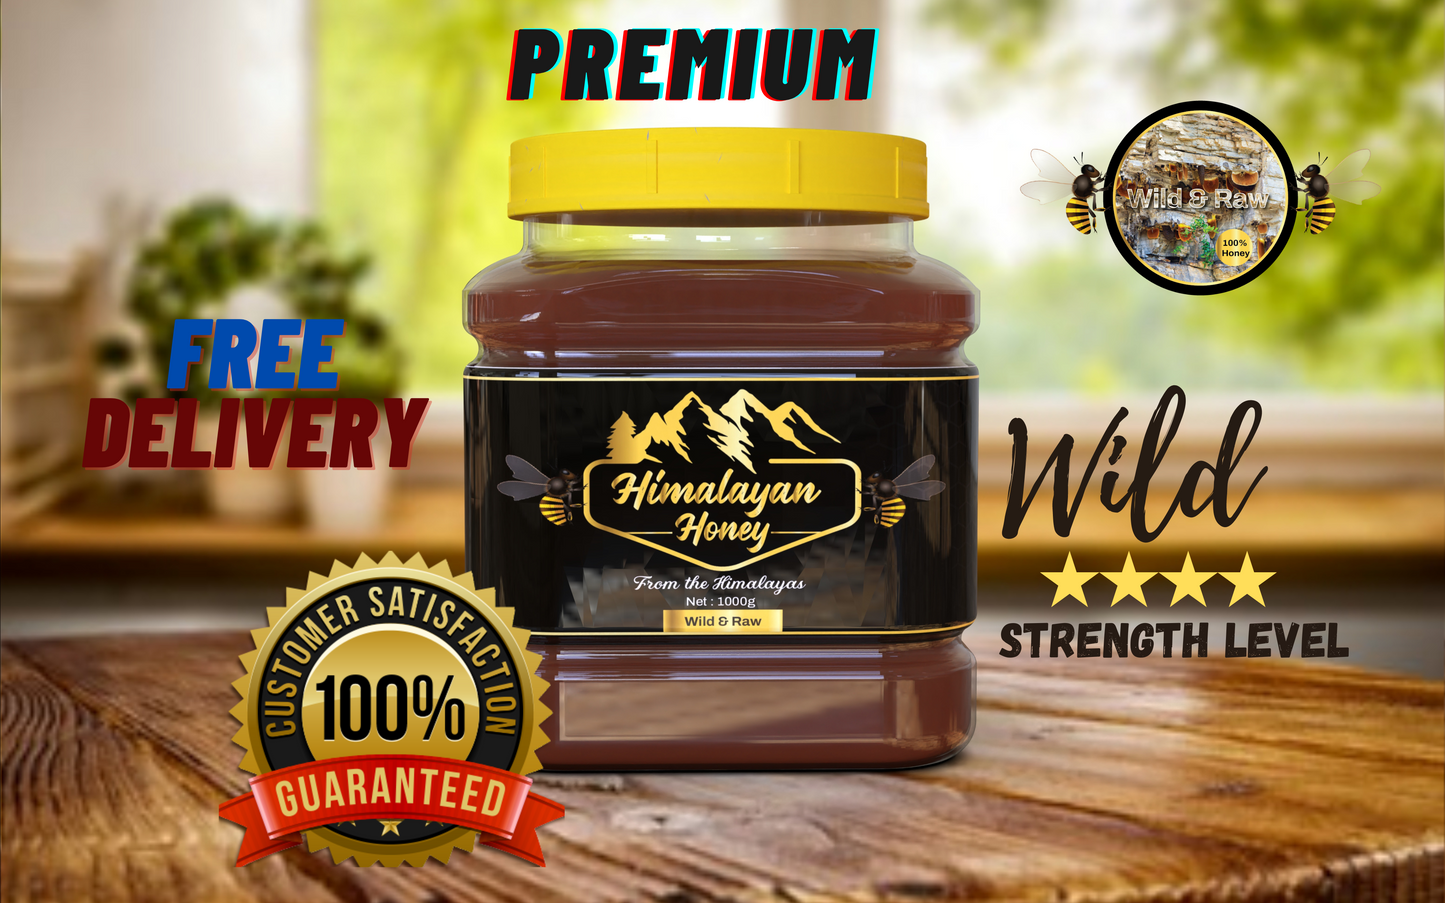 Mad Honey Himalayan premium 1000g Gold range Nepal